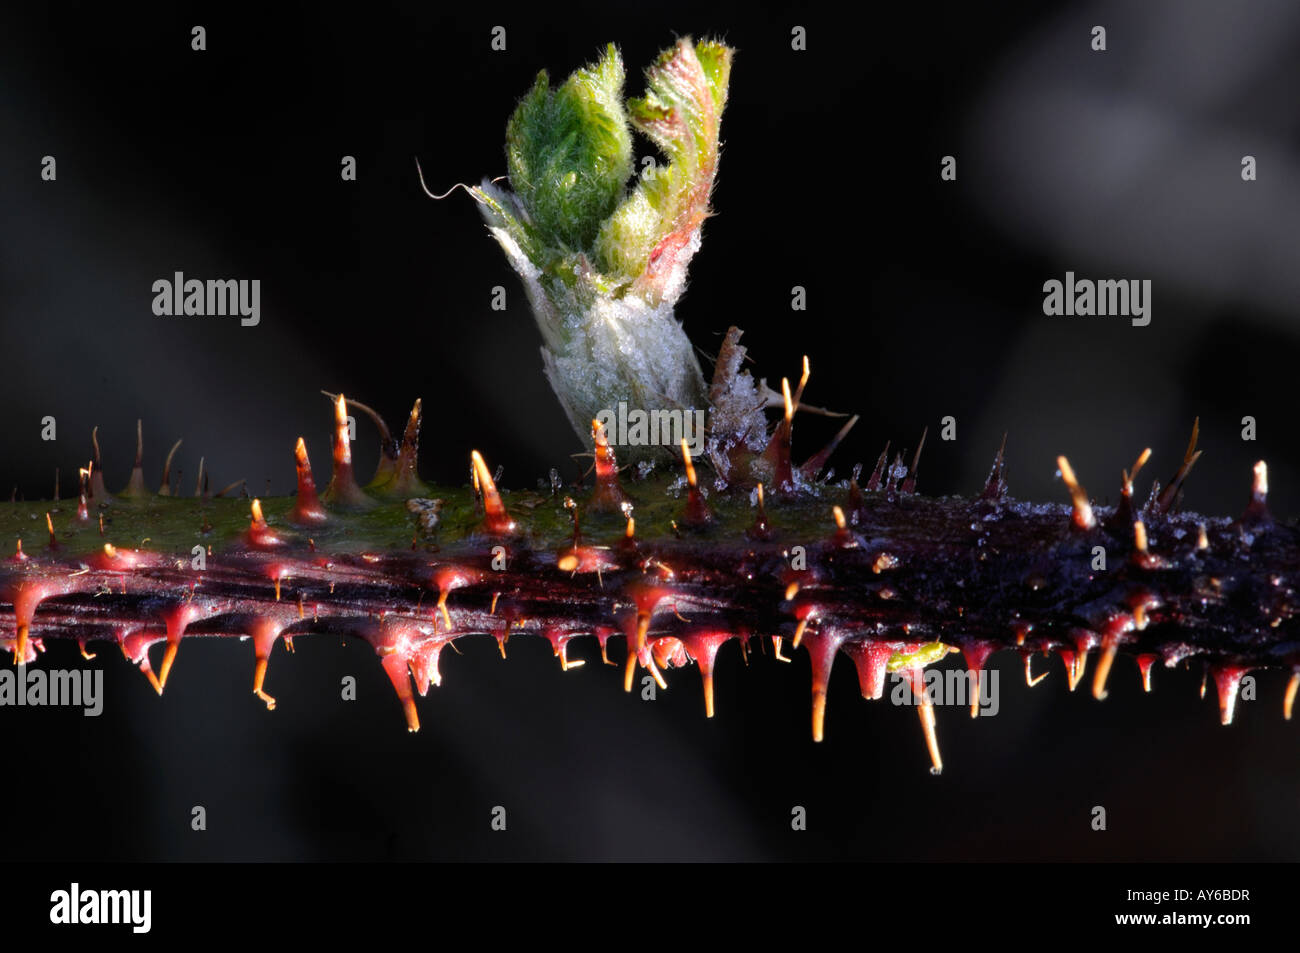 Blackberry leaf Stock Photo